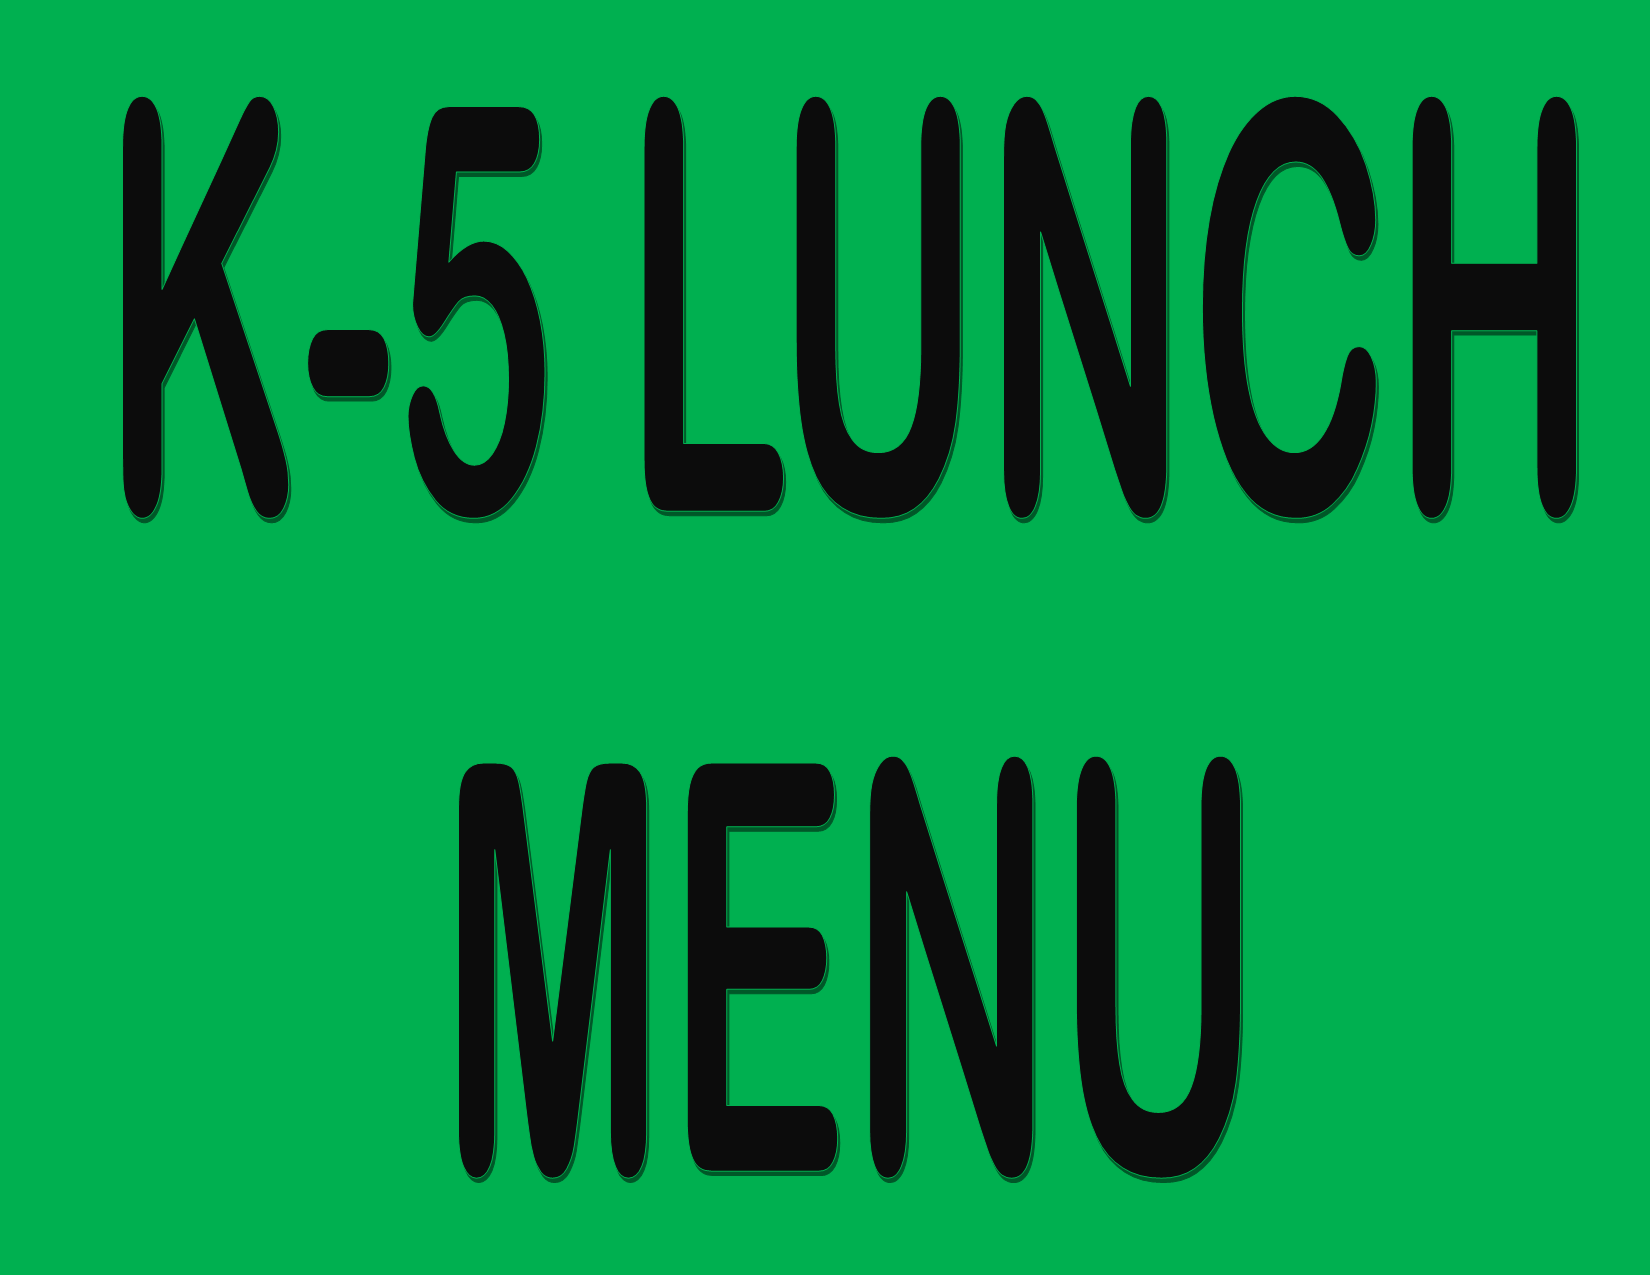 K- 5 Lunch Menu